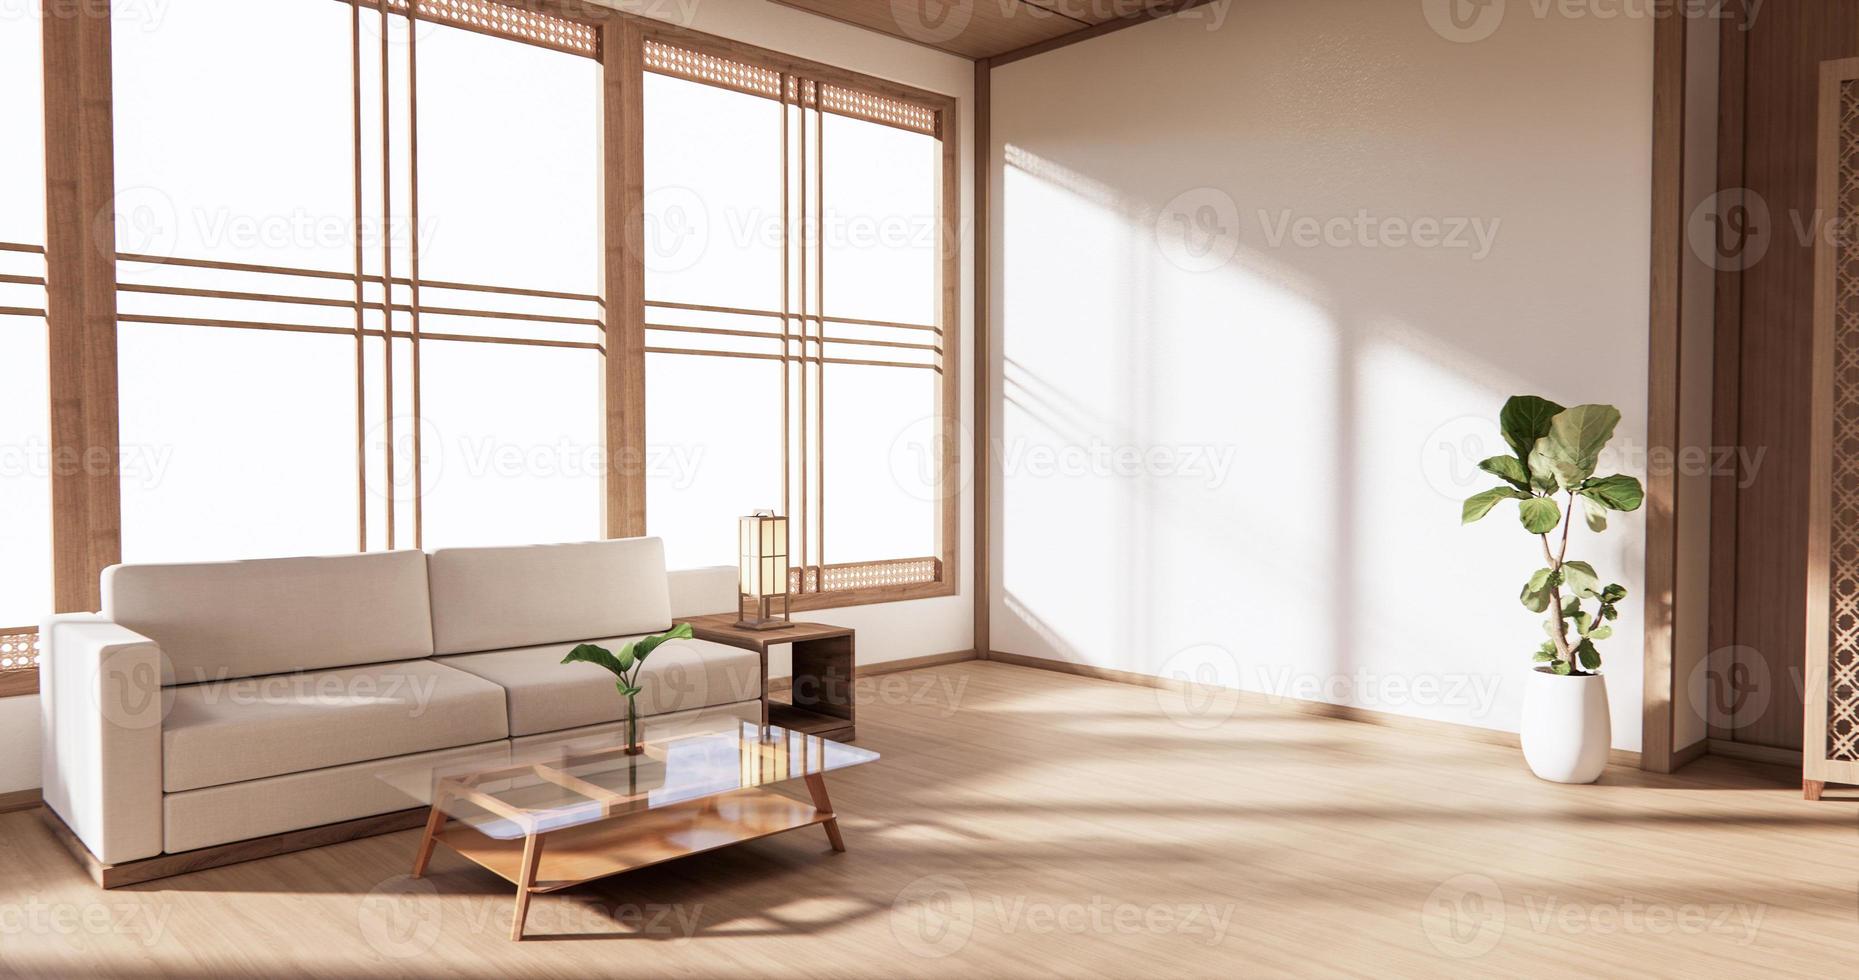 el diseño interior de madera, estilo japonés de la sala de estar moderna zen representación 3d foto